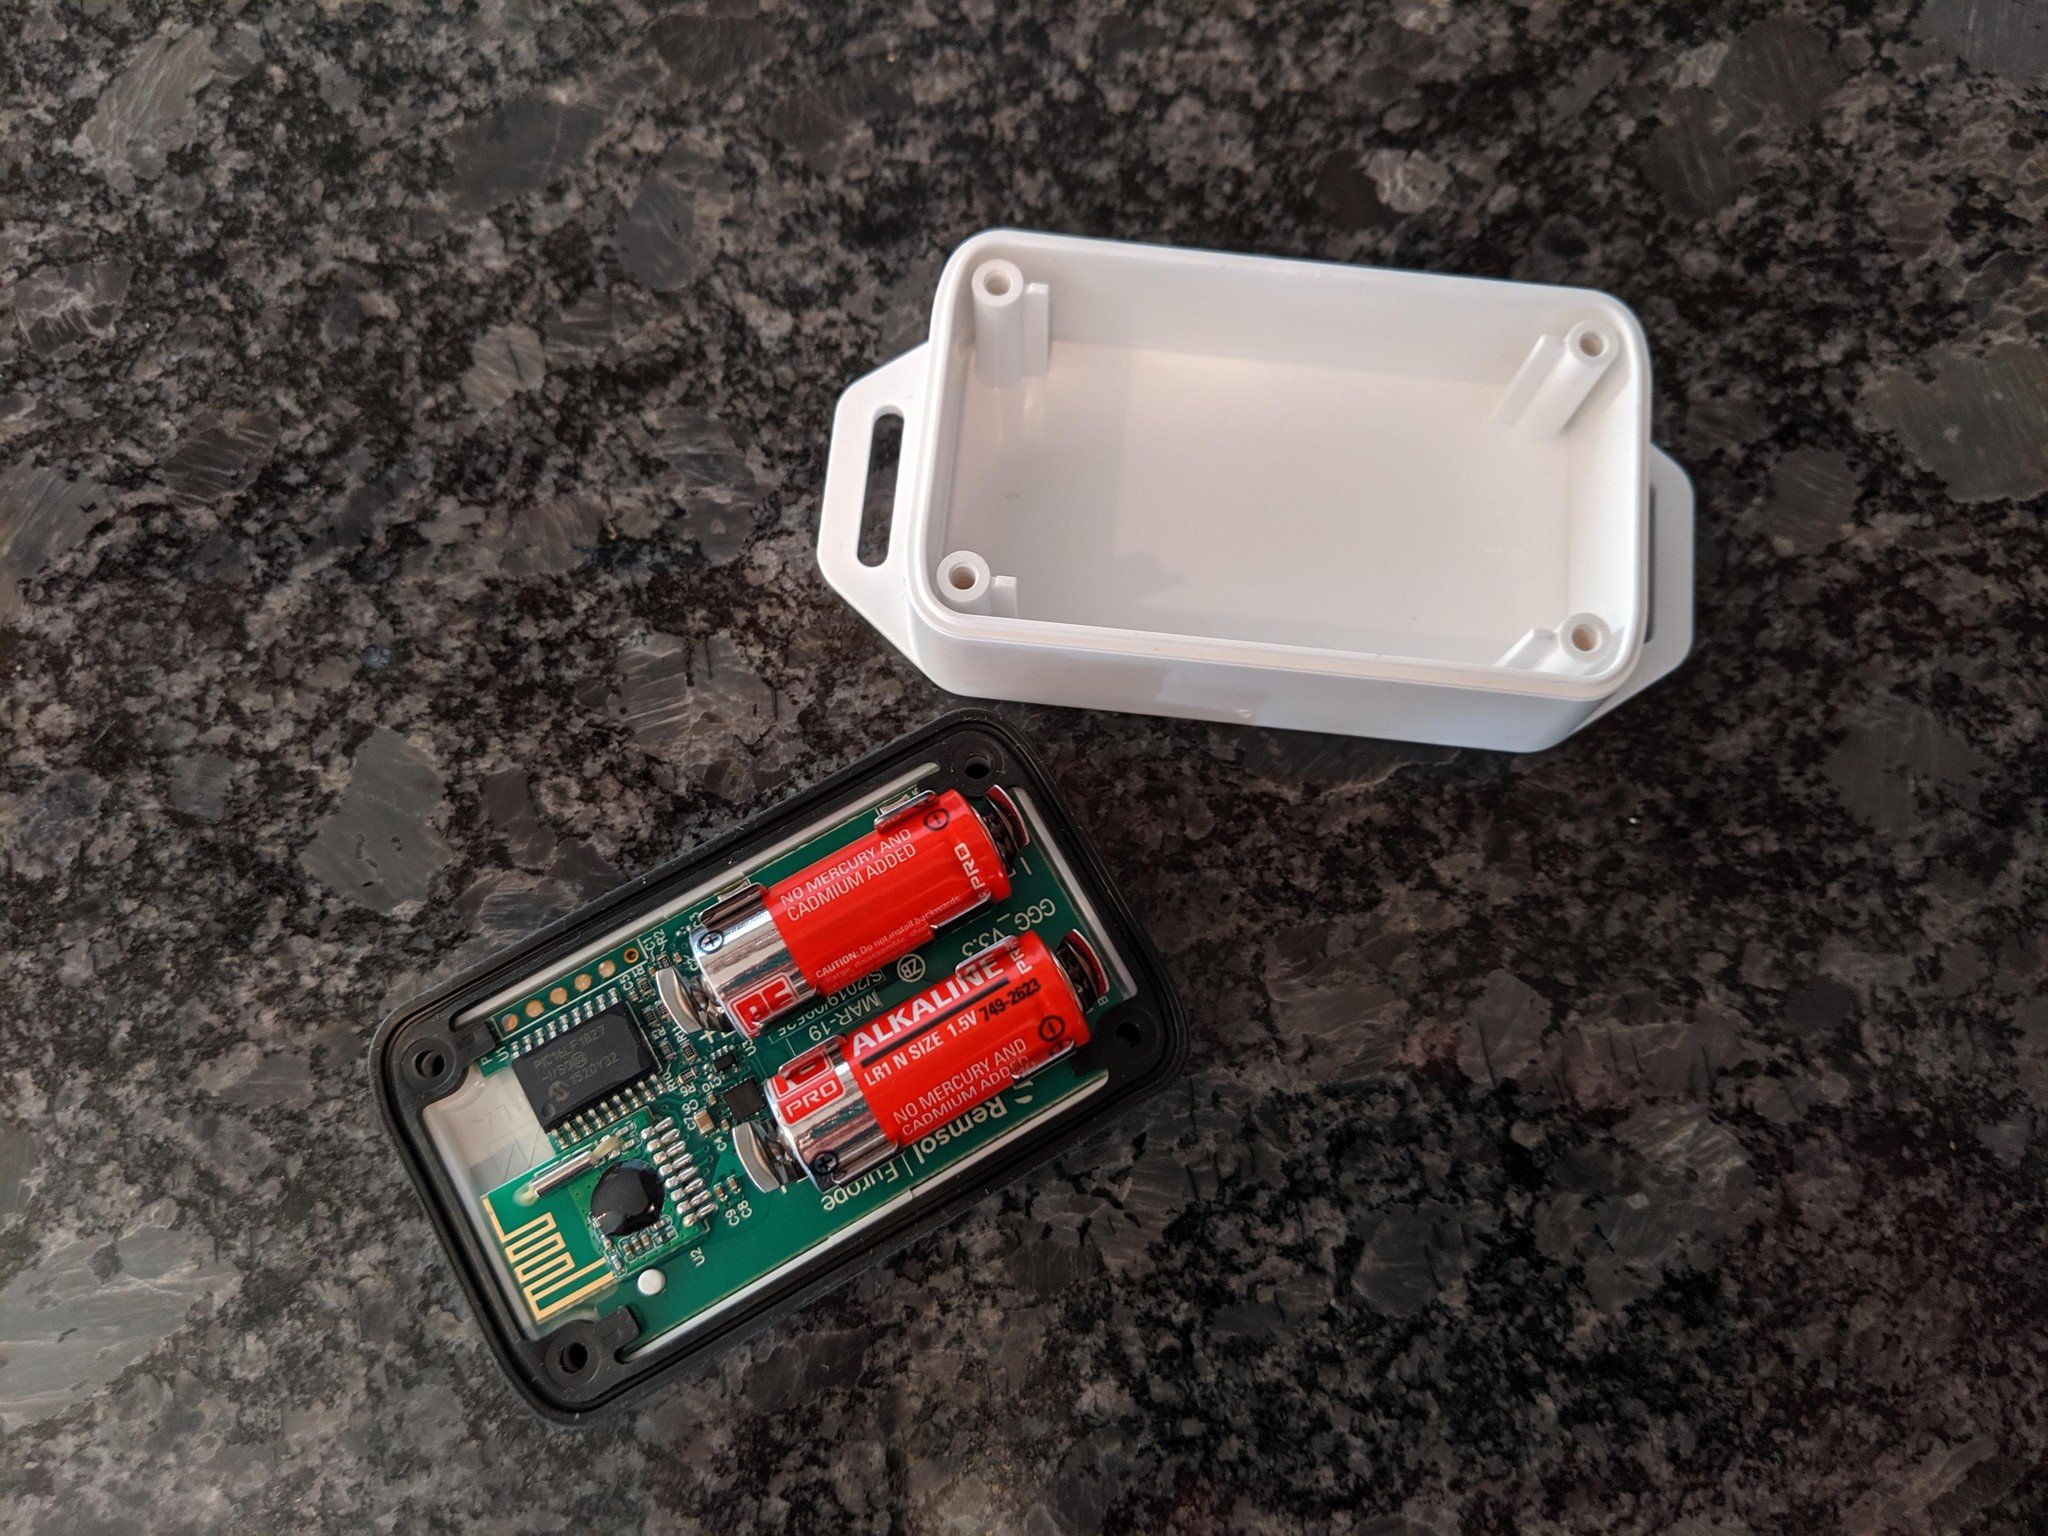 The iSmartGate Pro sensor taken apart with batteries exposed.